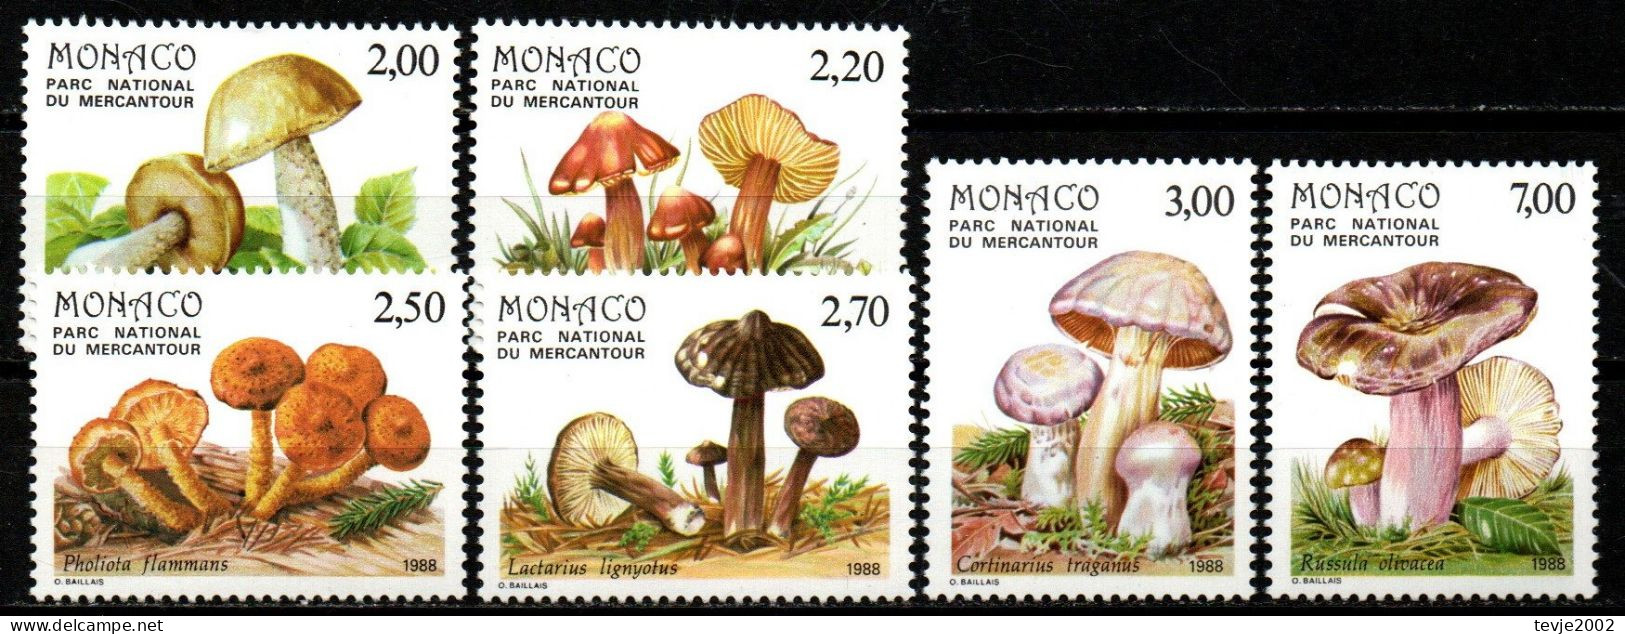 Monaco 1988 - Mi.Nr. 1861 - 1866 - Postfrisch MNH - Pilze Mushrooms - Champignons